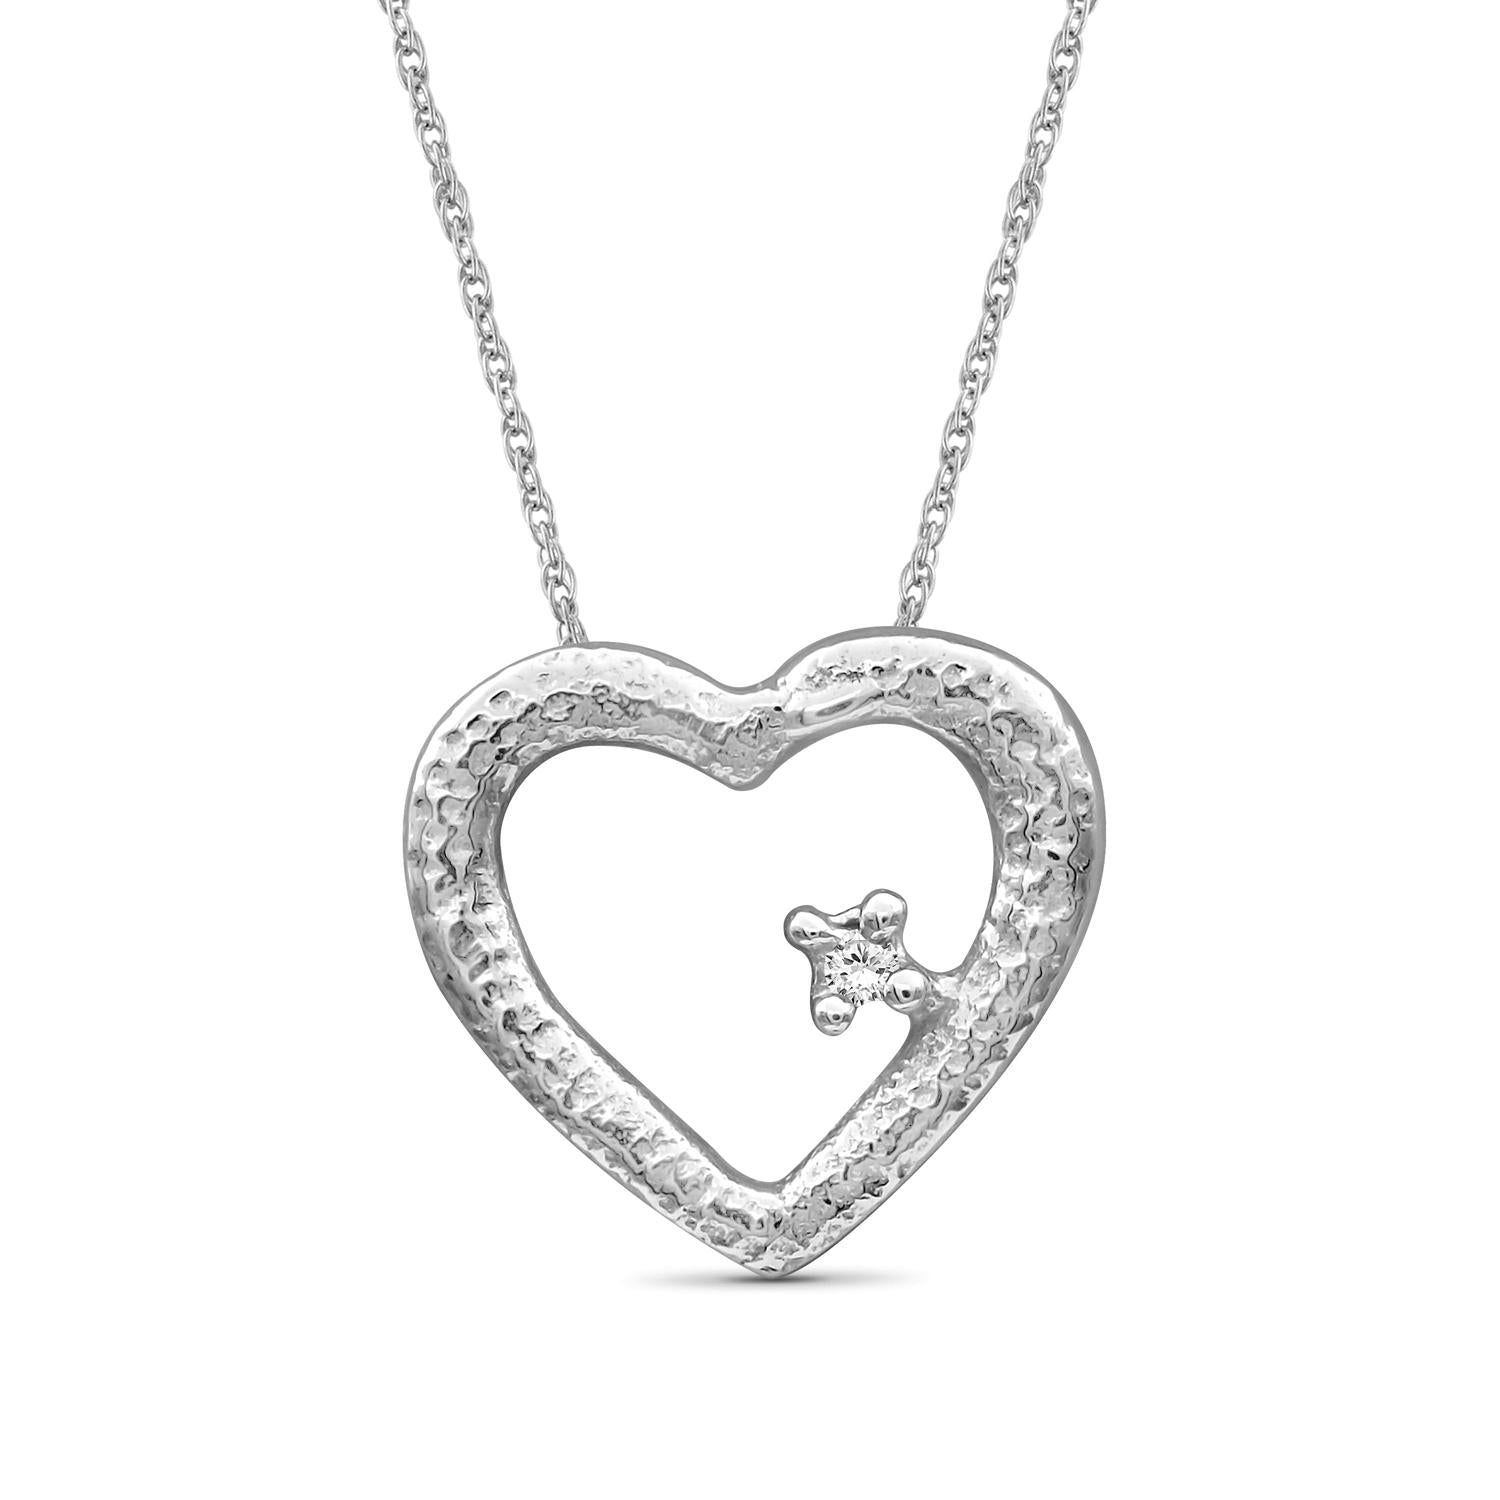 Accent White Diamond Sterling Silver Heart Pendant